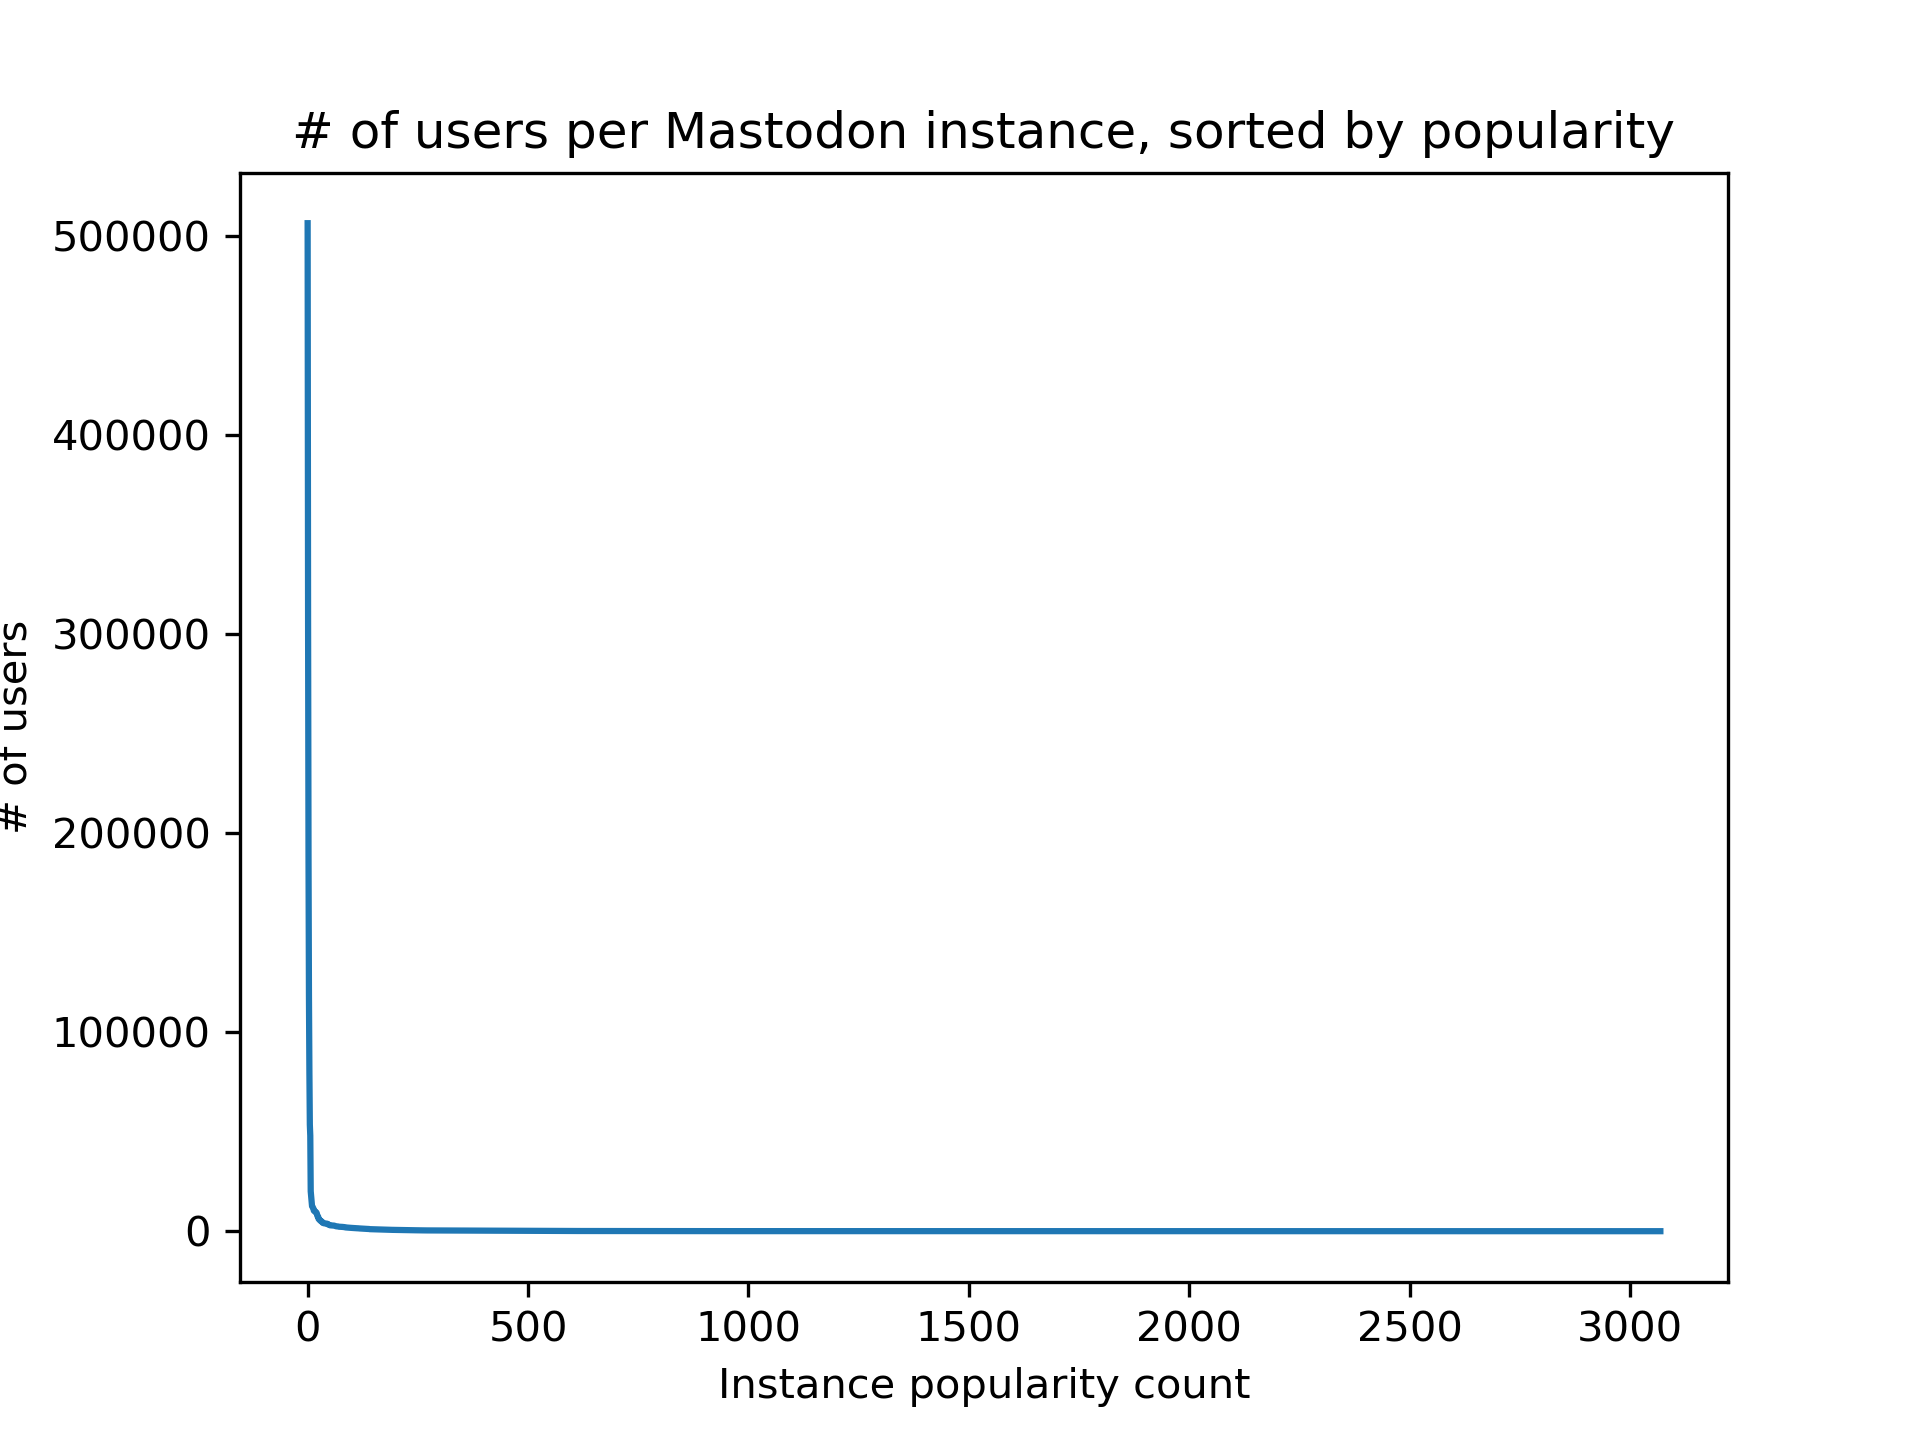 Mastodon users per instance